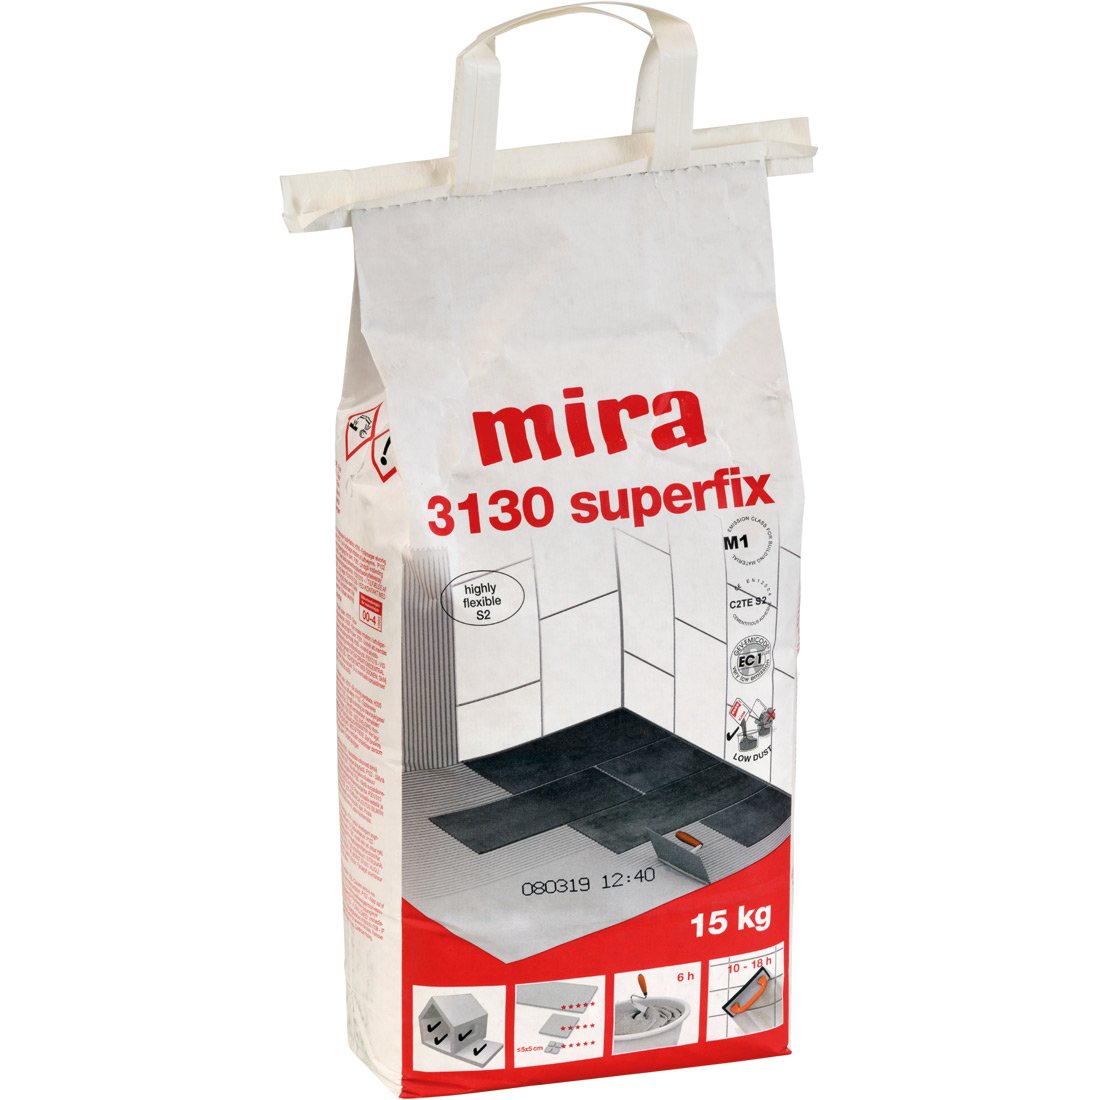 MIRA 3130 SUPERFIX 15KG